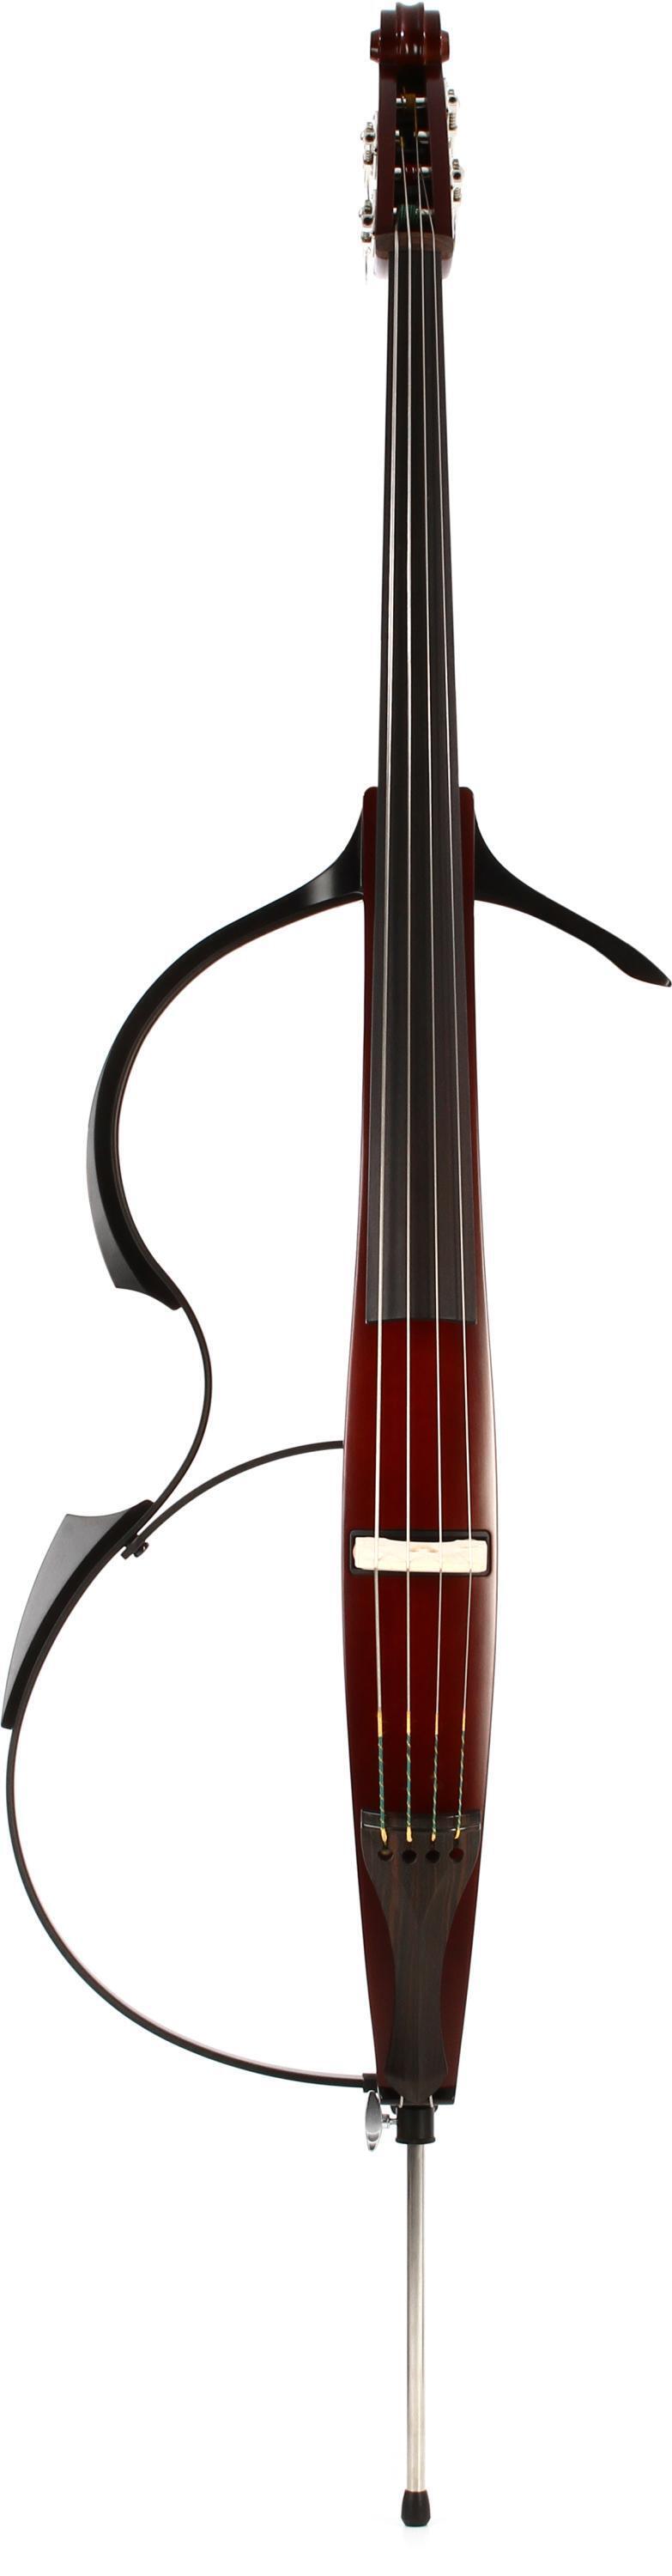 Yamaha SVB-100 Silent Electric Upright Bass | Sweetwater